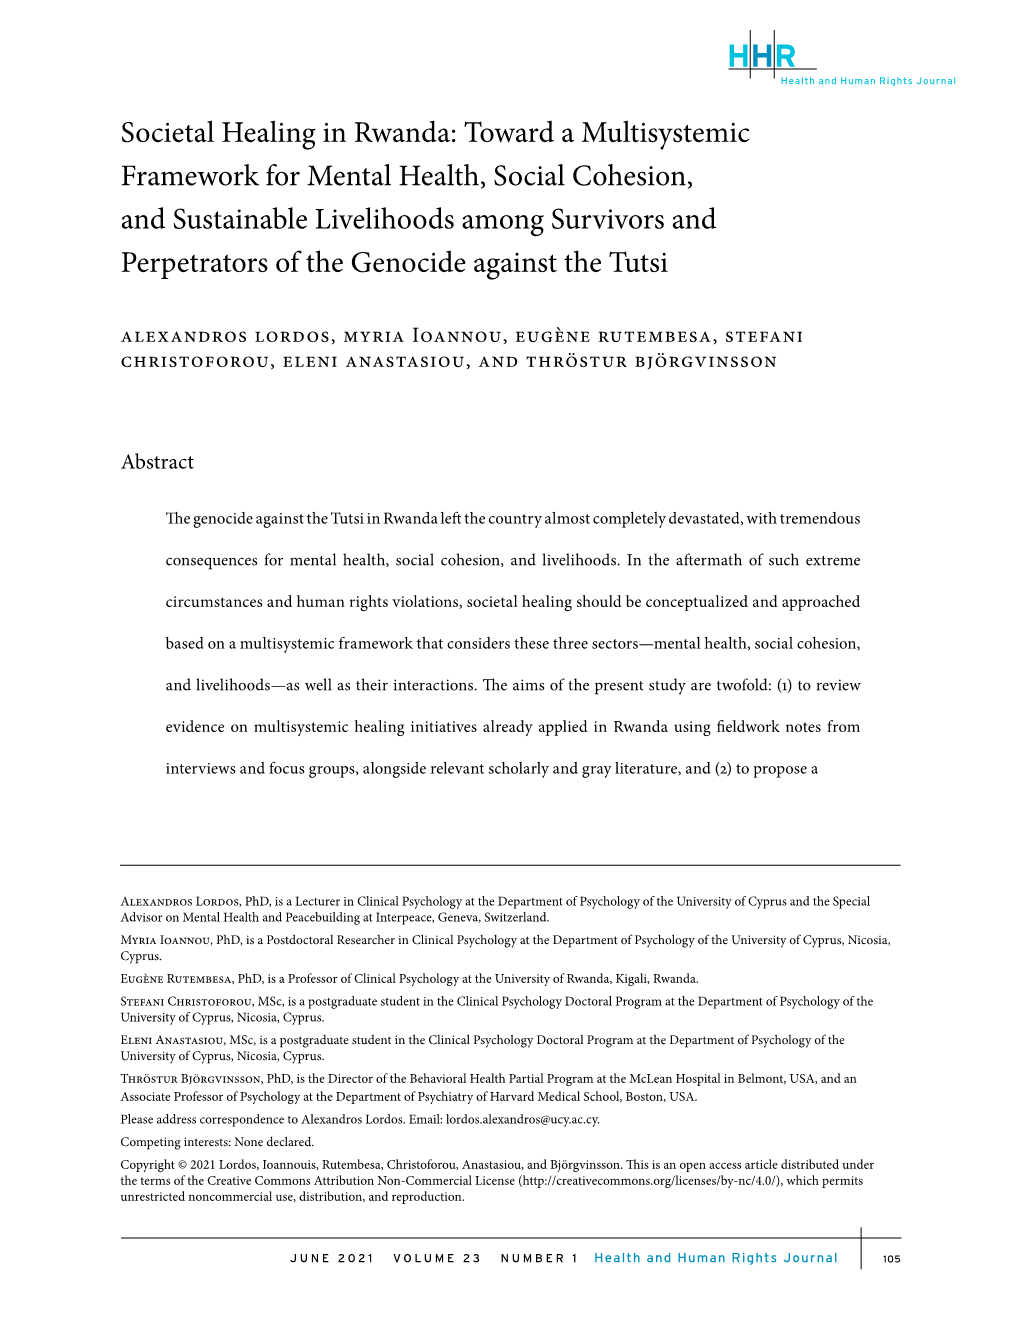 Toward a Multisystemic Framework for Mental Health, Social Cohesion